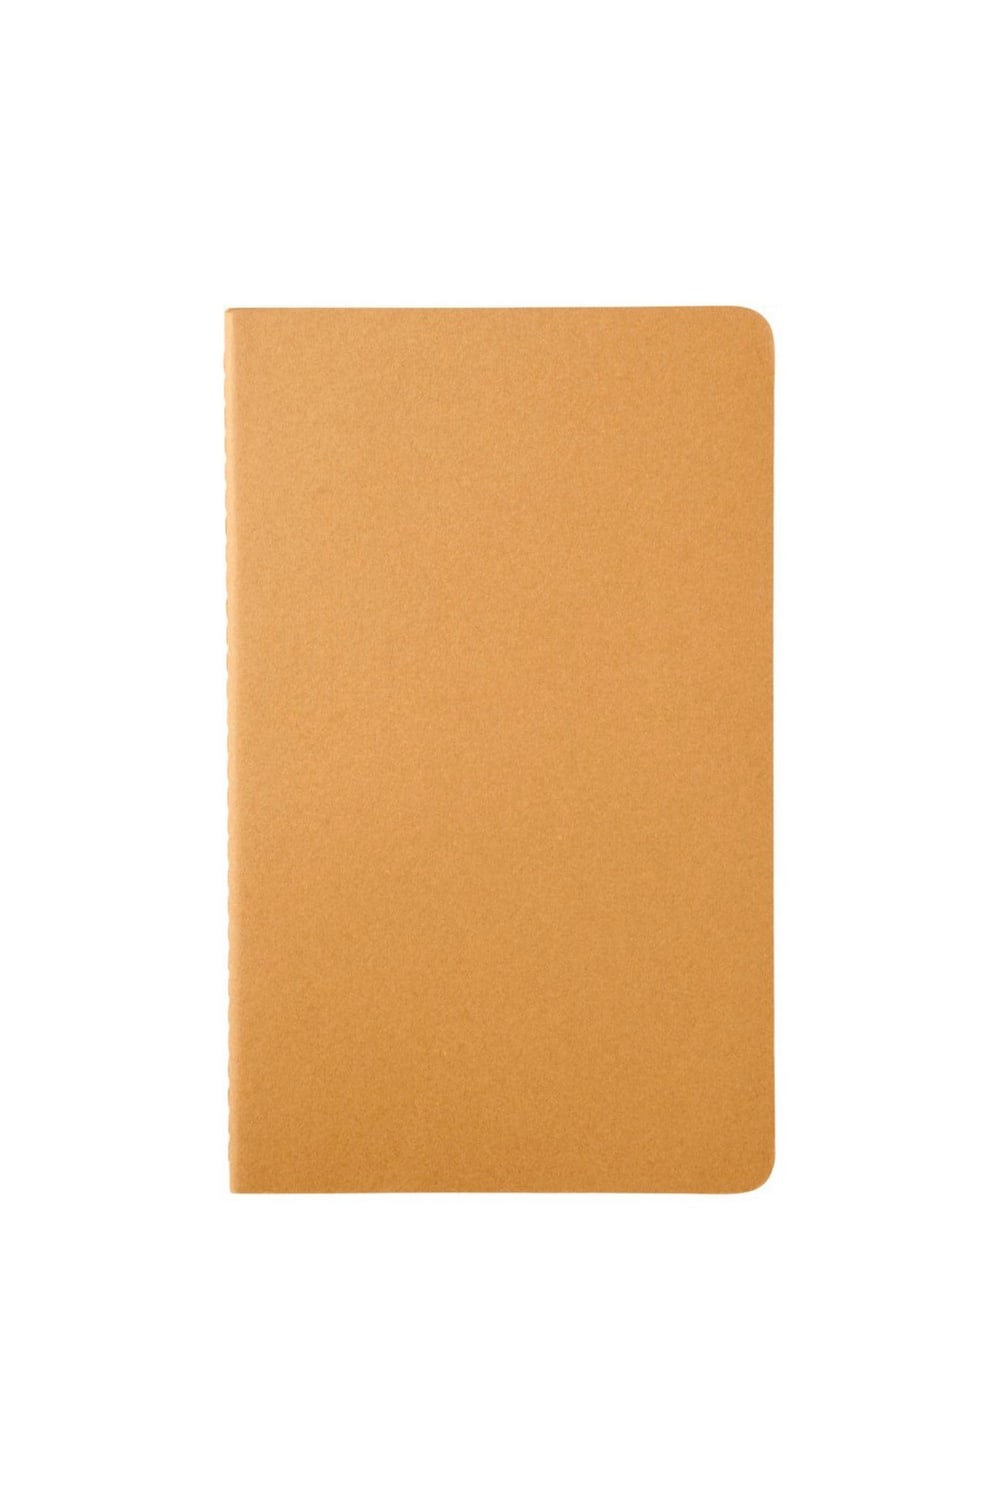 Moleskine Cahier Large Plain Journal (Kraft Brown) (One Size)